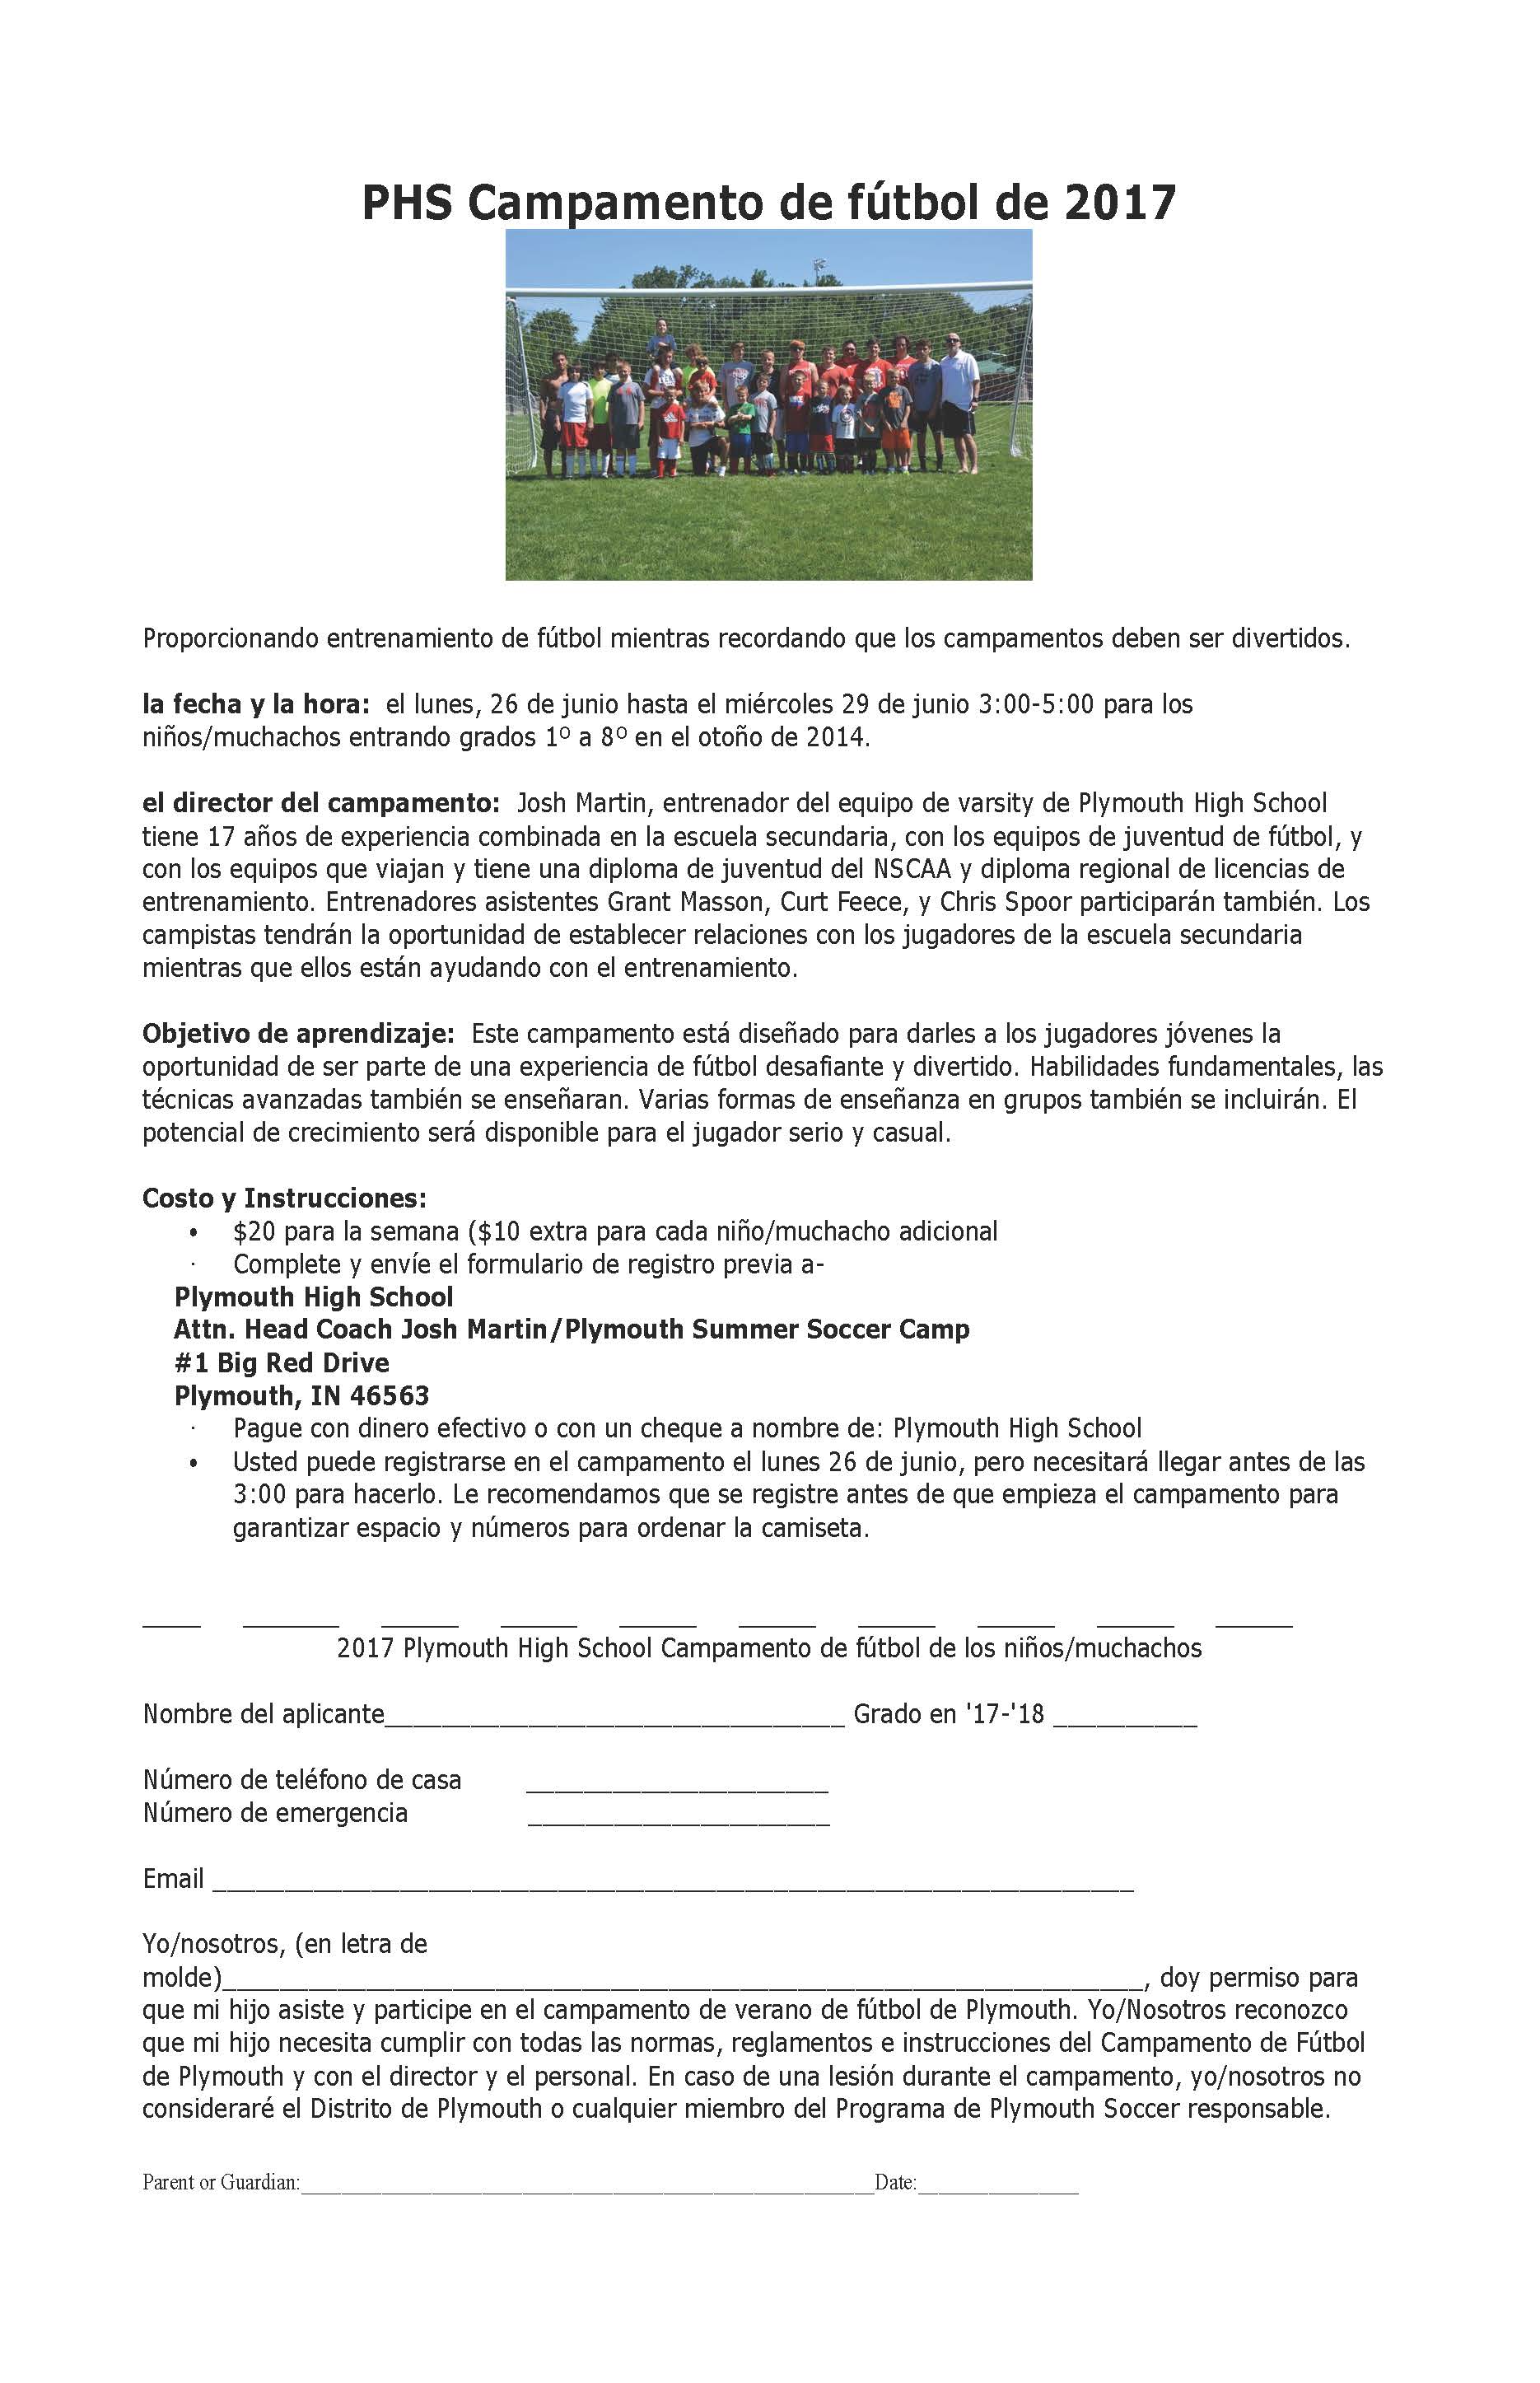 Boys Soccer Camp Flyer in Español